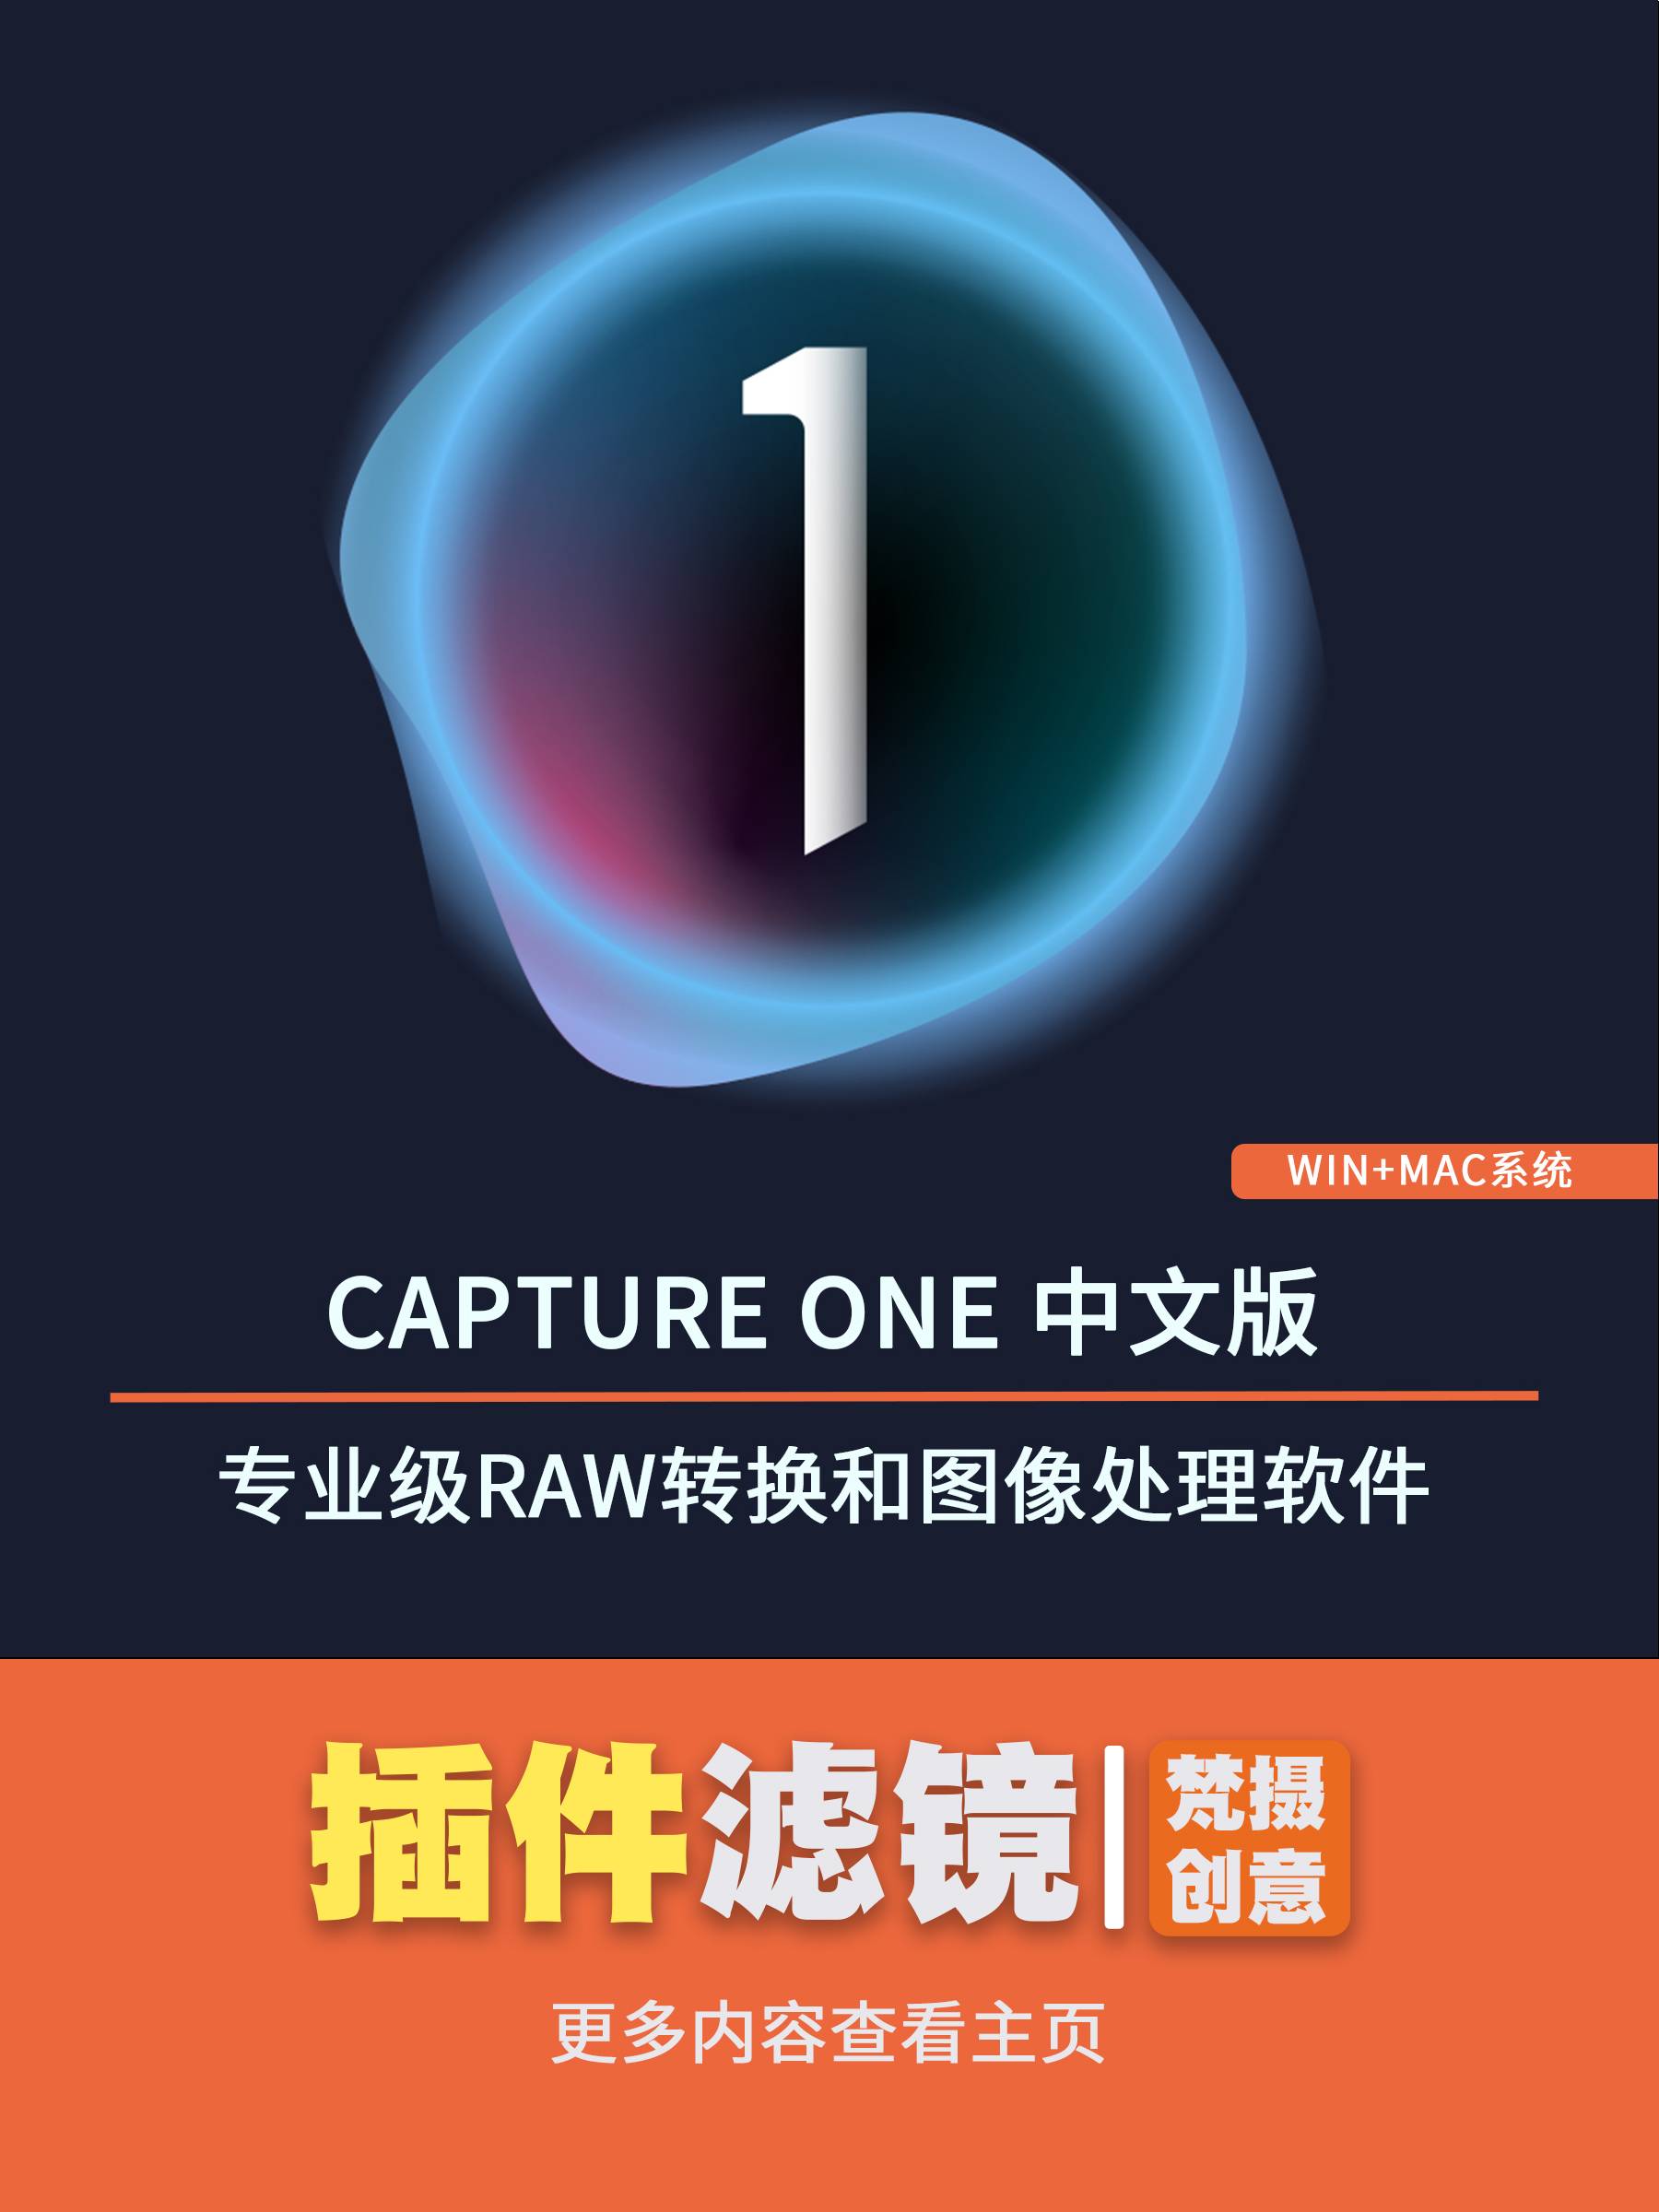 Capture One：专业级RAW转换和图像处理软件-梵摄创意库